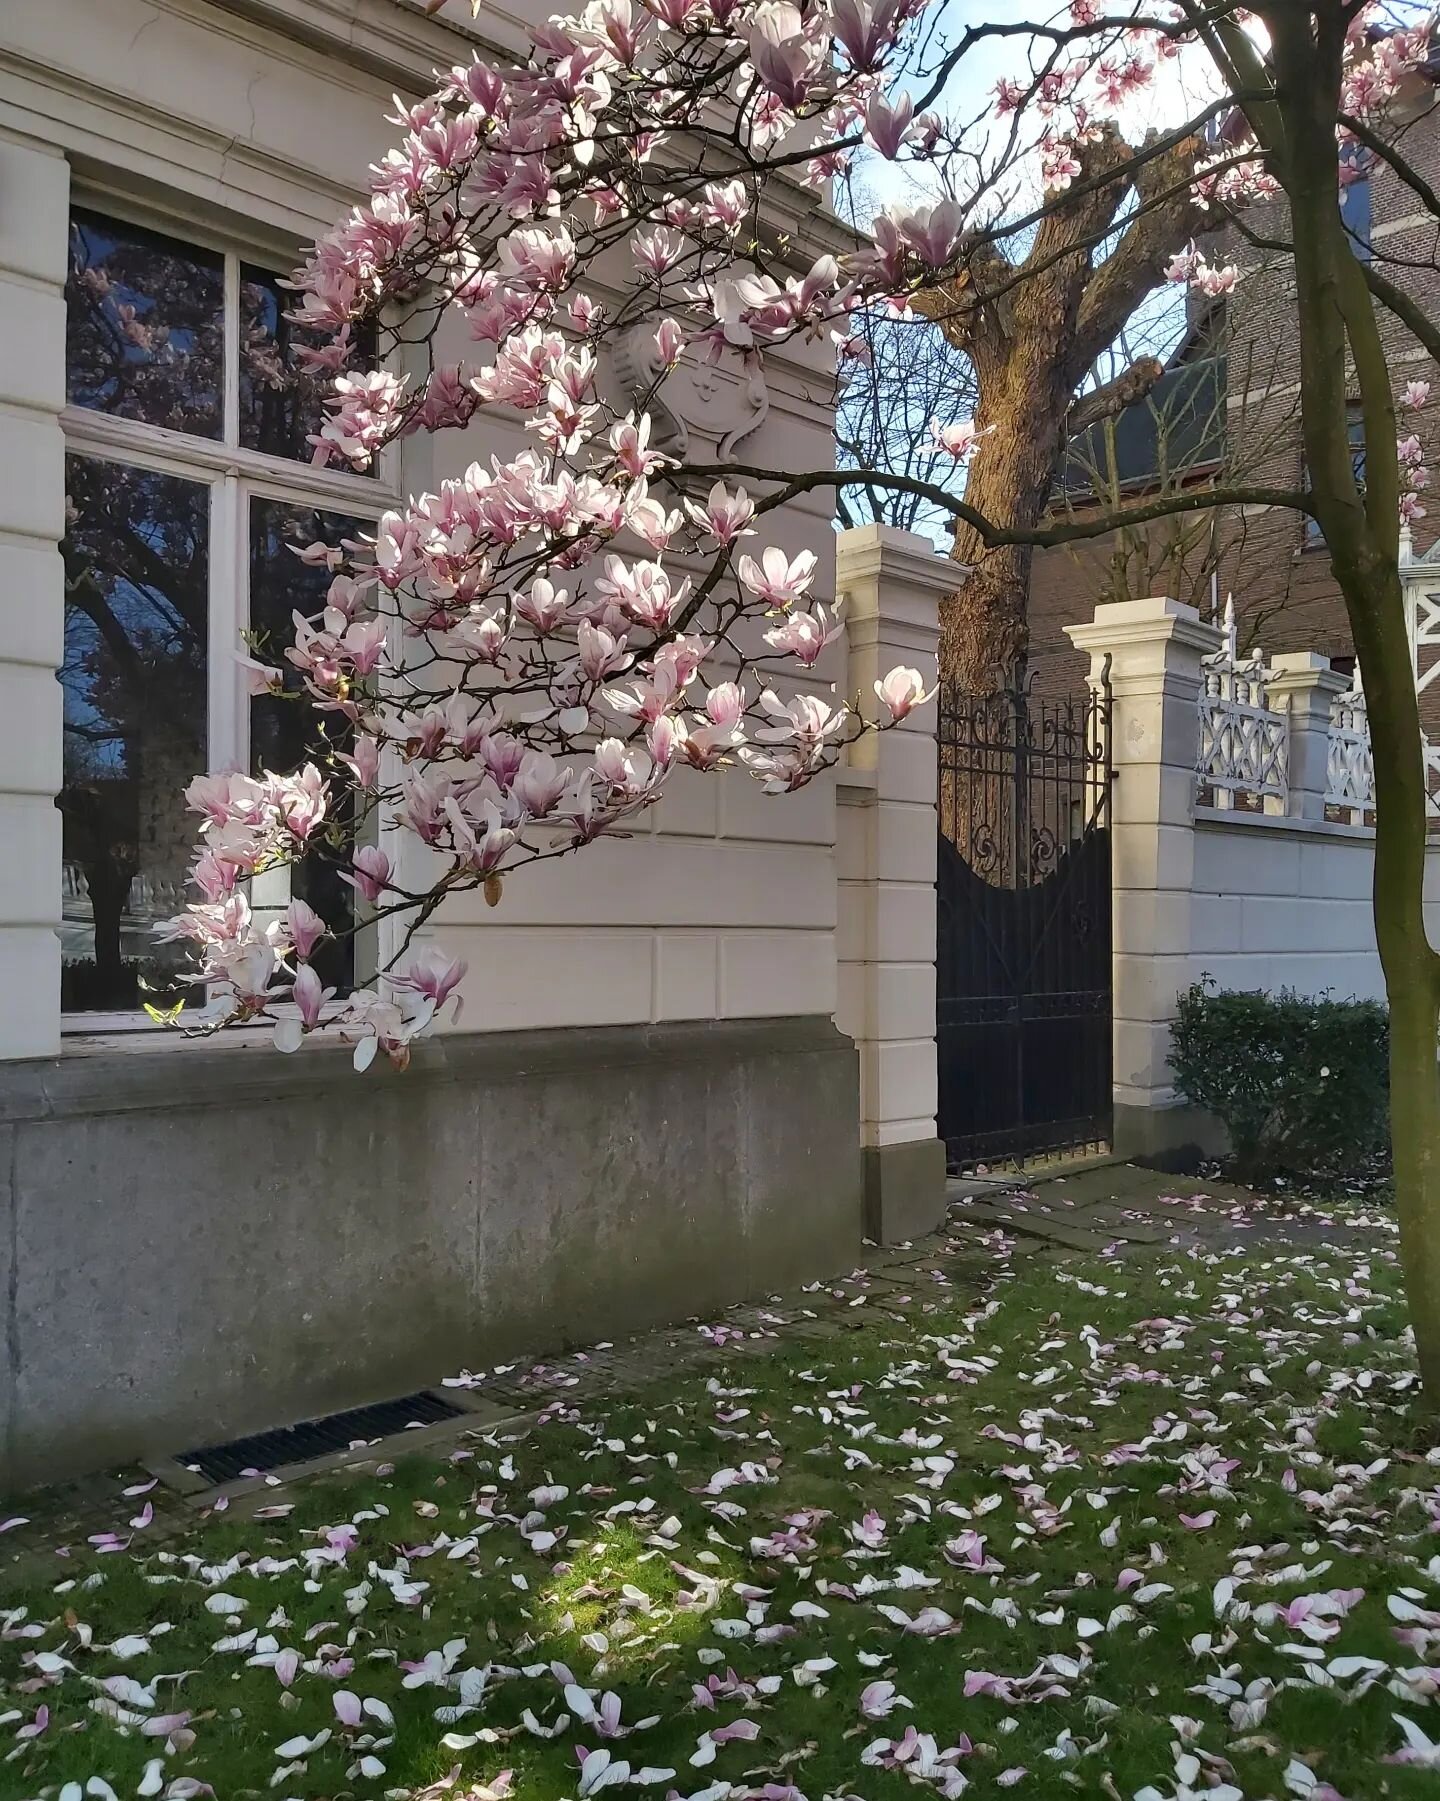 Finally spring ...
.
.
.
.
#magnolia #zurenborg #antwerp #magnoliatree #spring